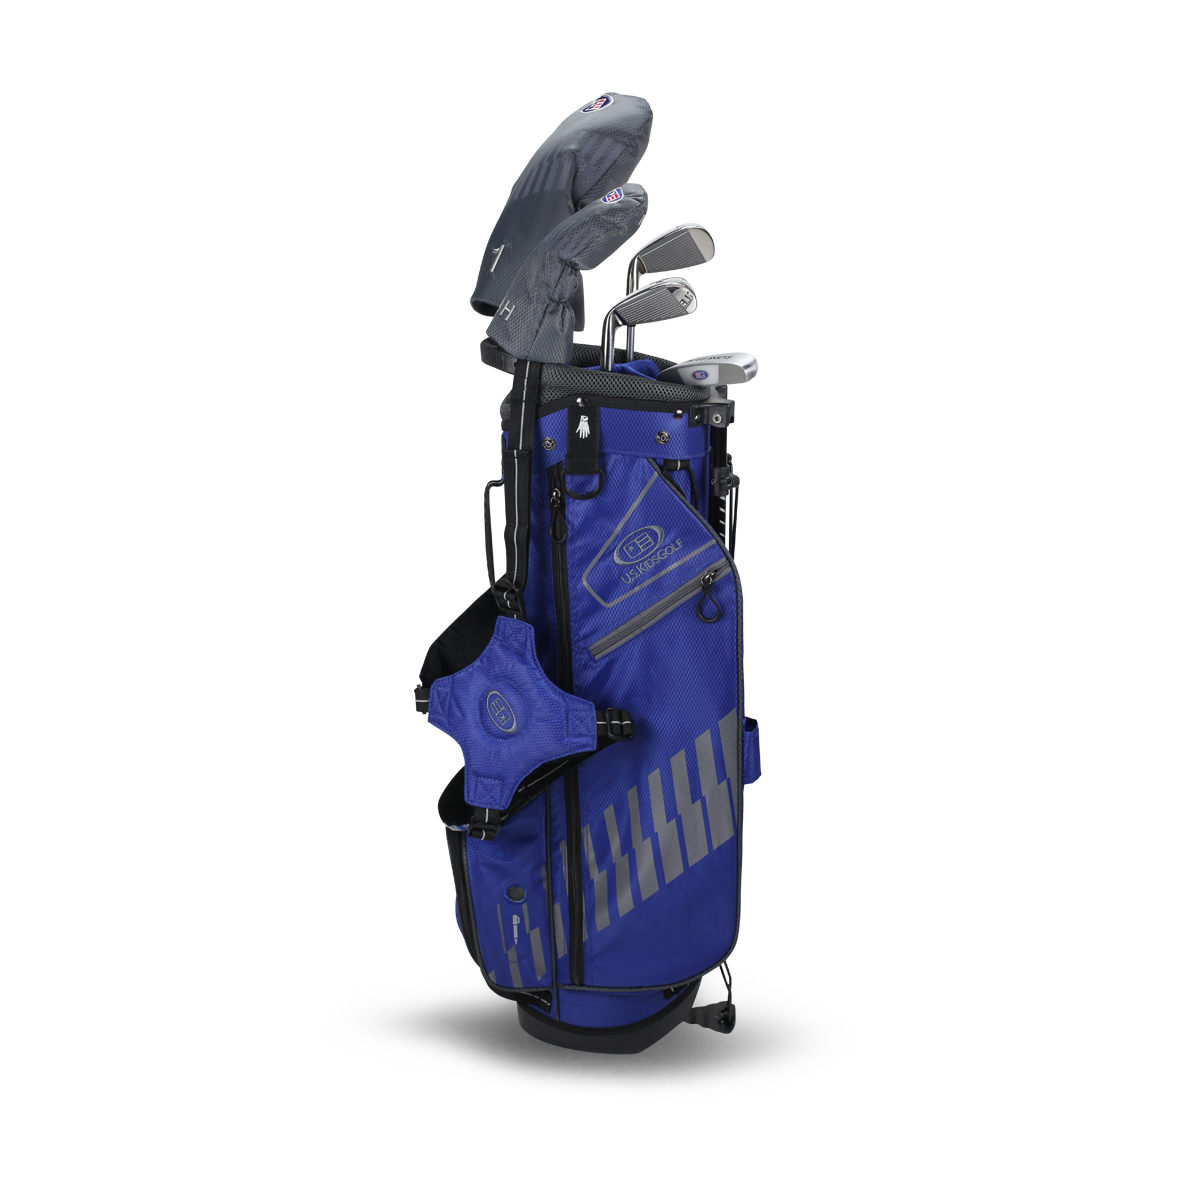 UL57-s 5 Club Stand Set, Blue/Grey Bag - U.S. Kids Golf